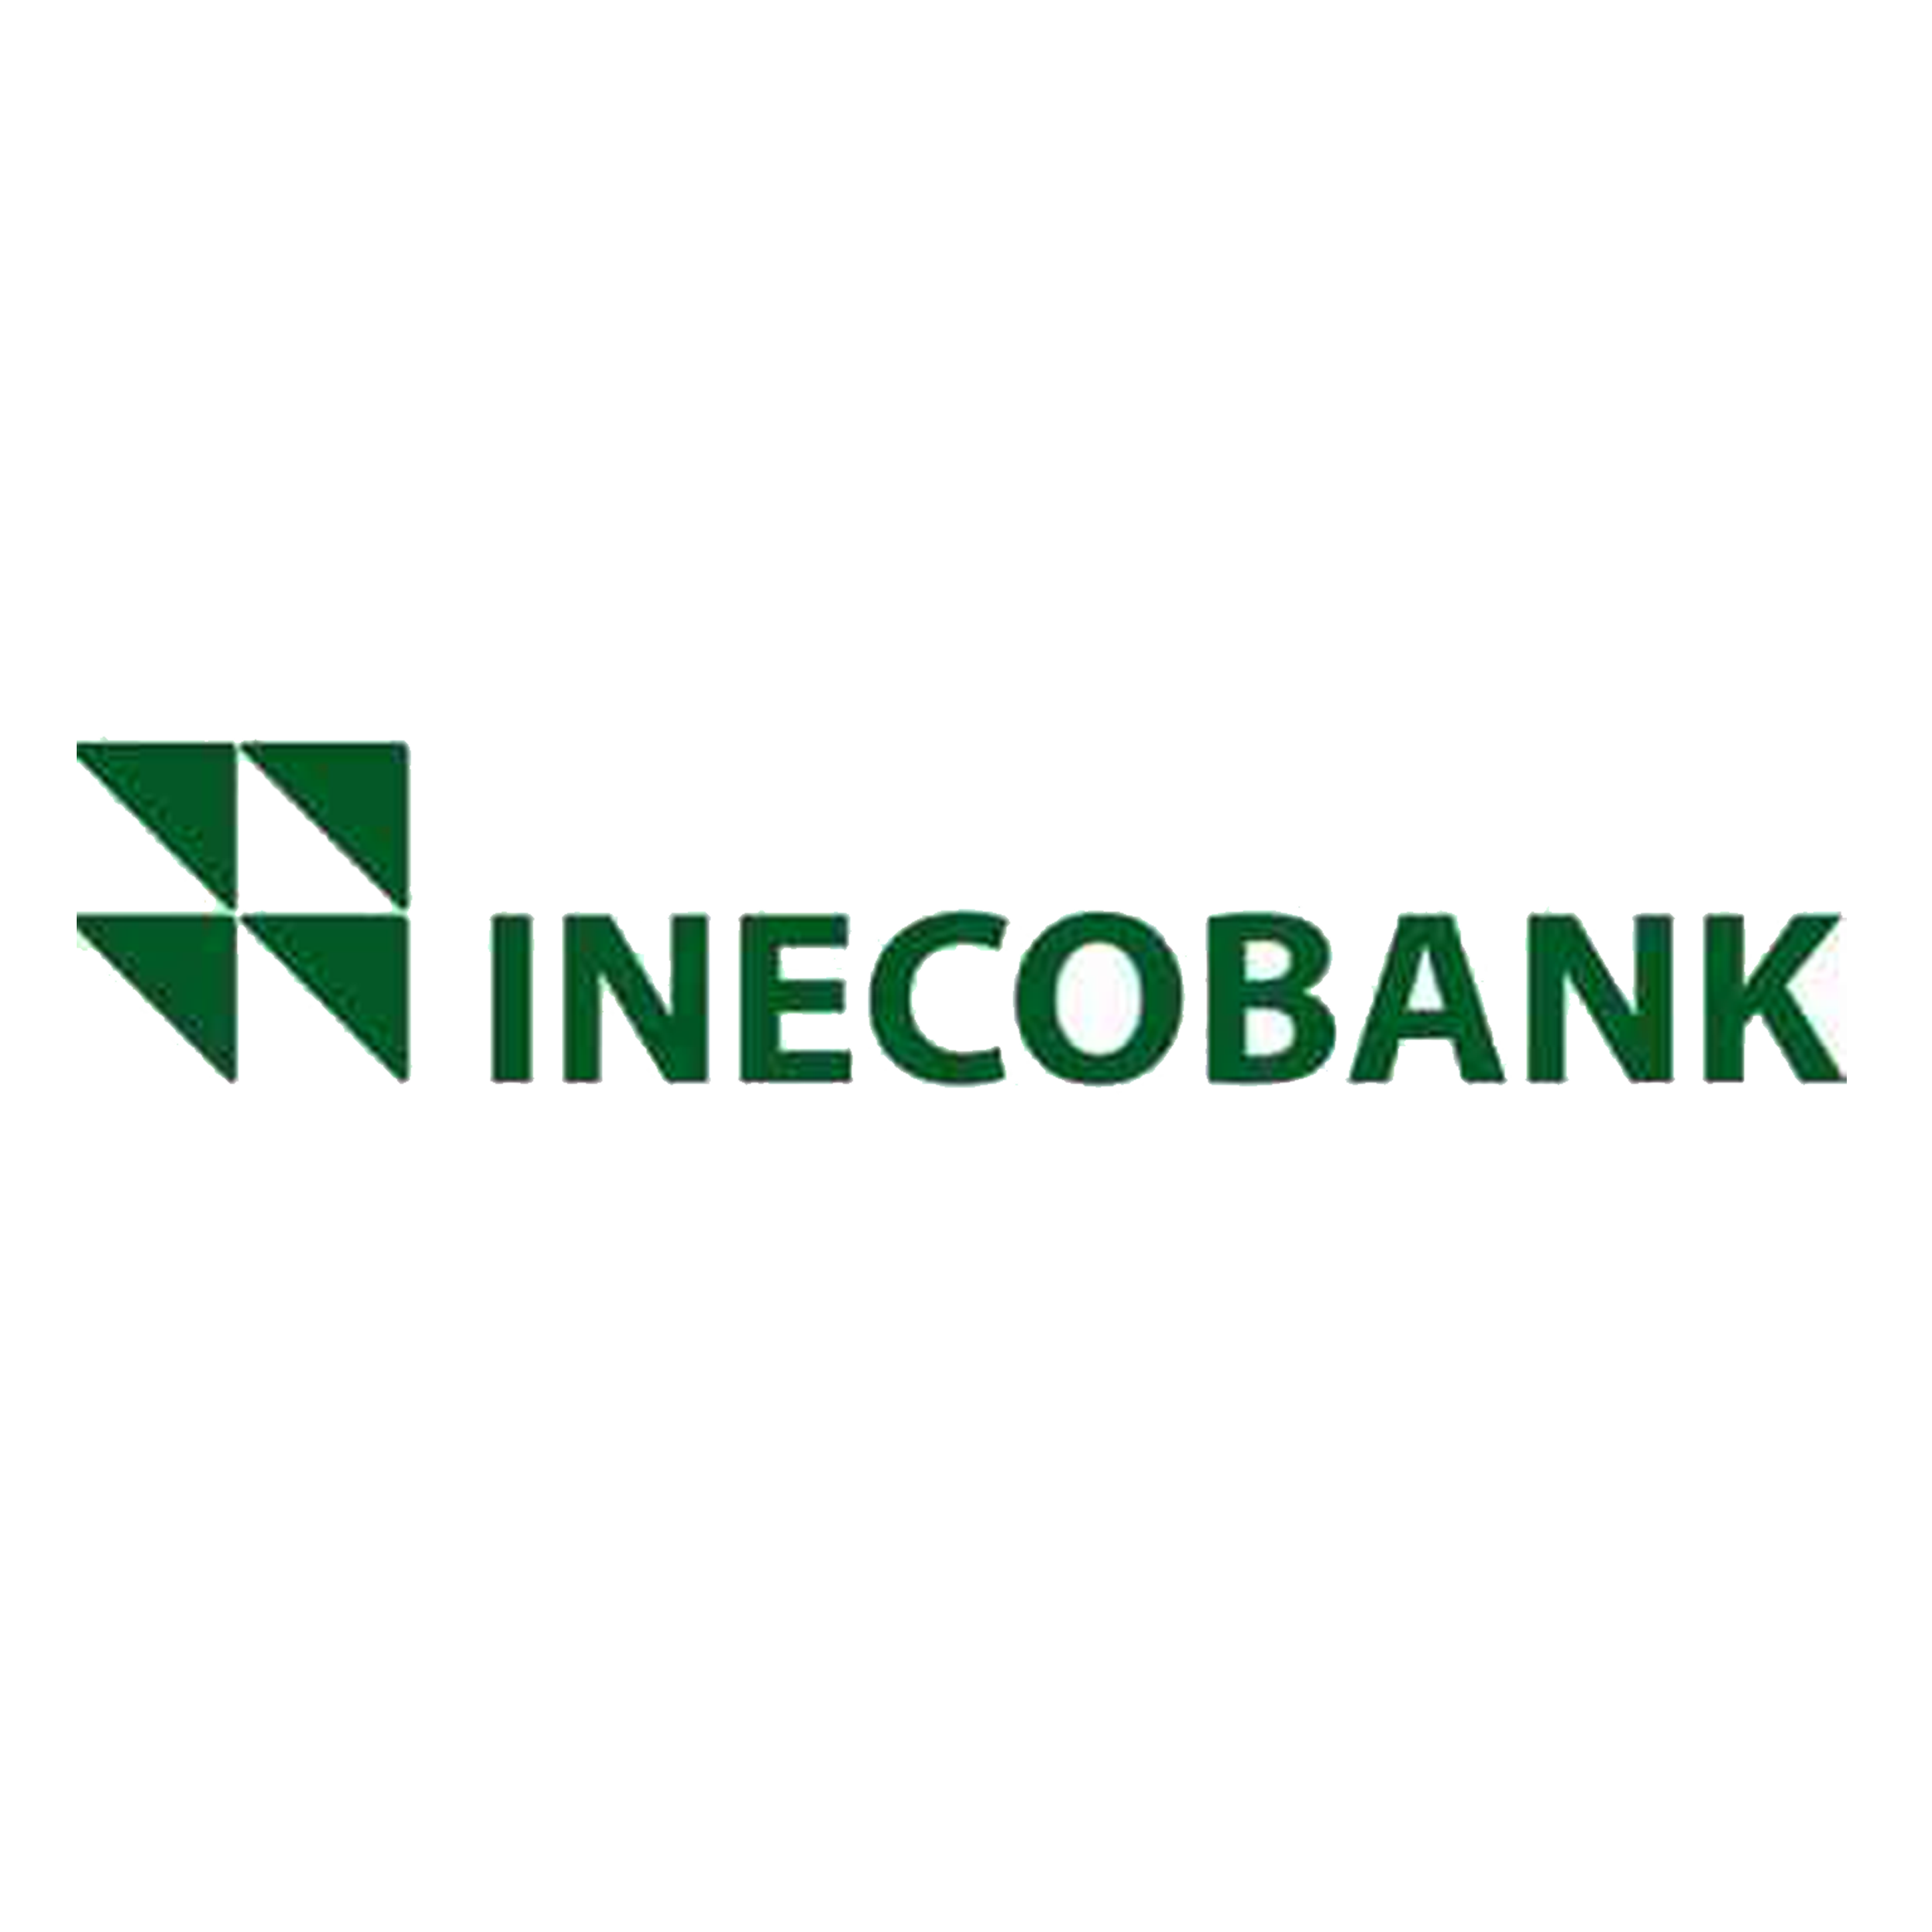 InecoBank